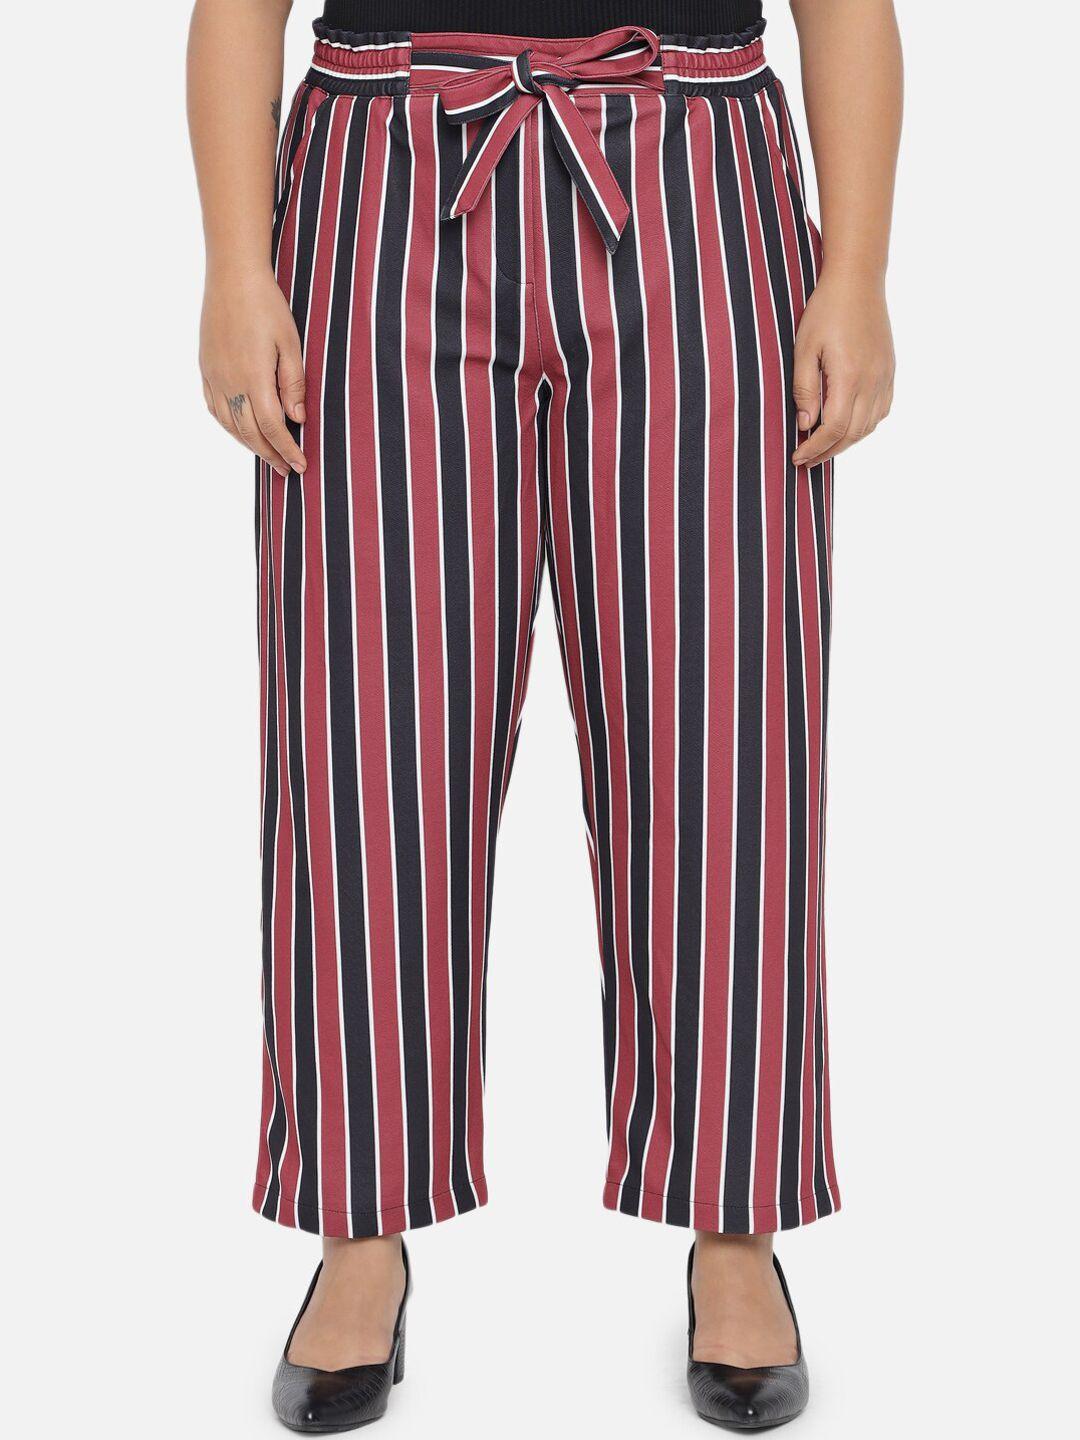 amydus women plus size red & black striped parallel trousers